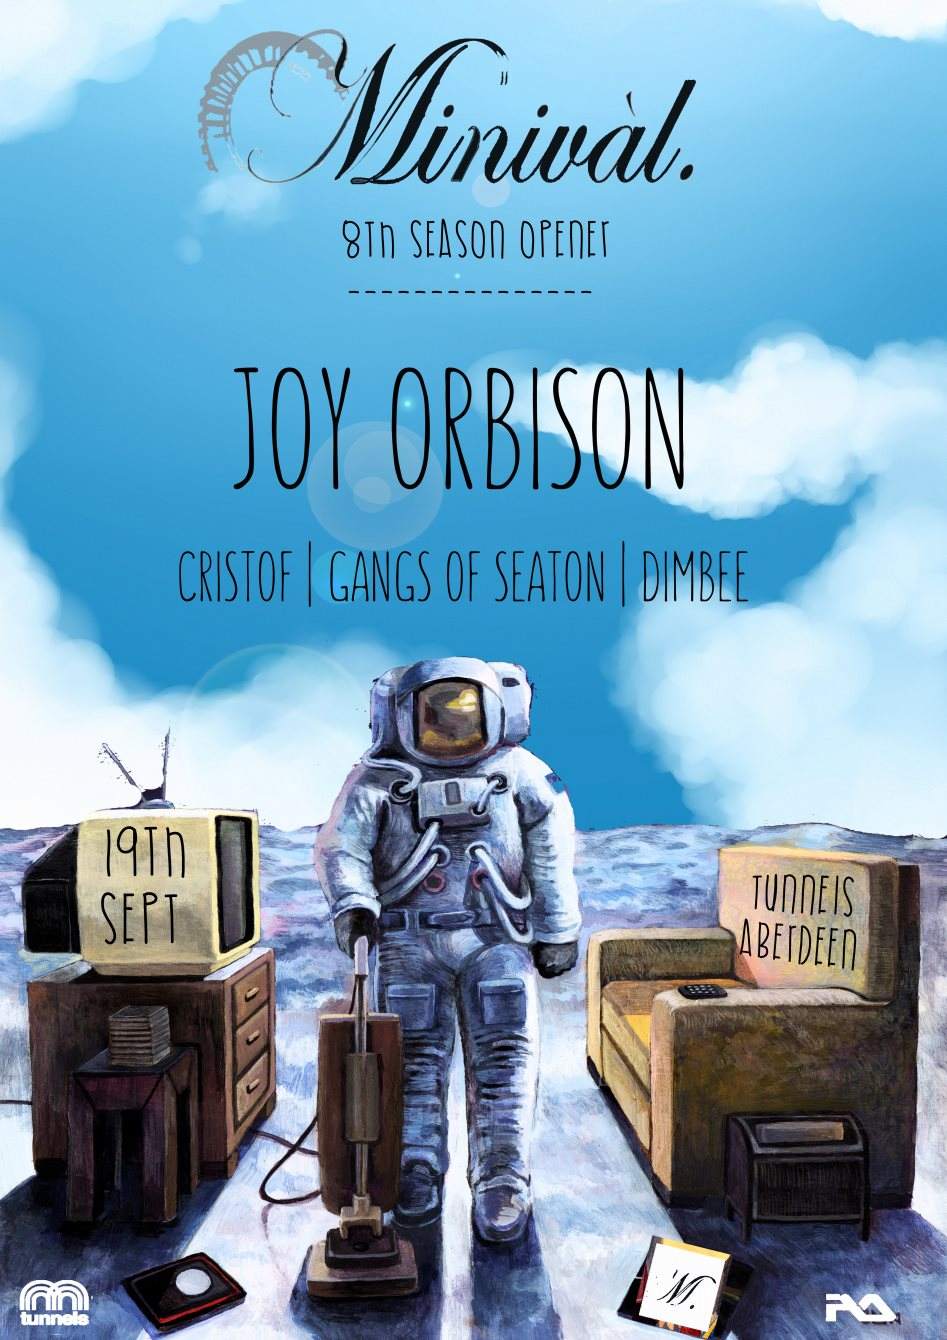 Minival 8th Season Opener with Joy Orbison - フライヤー表